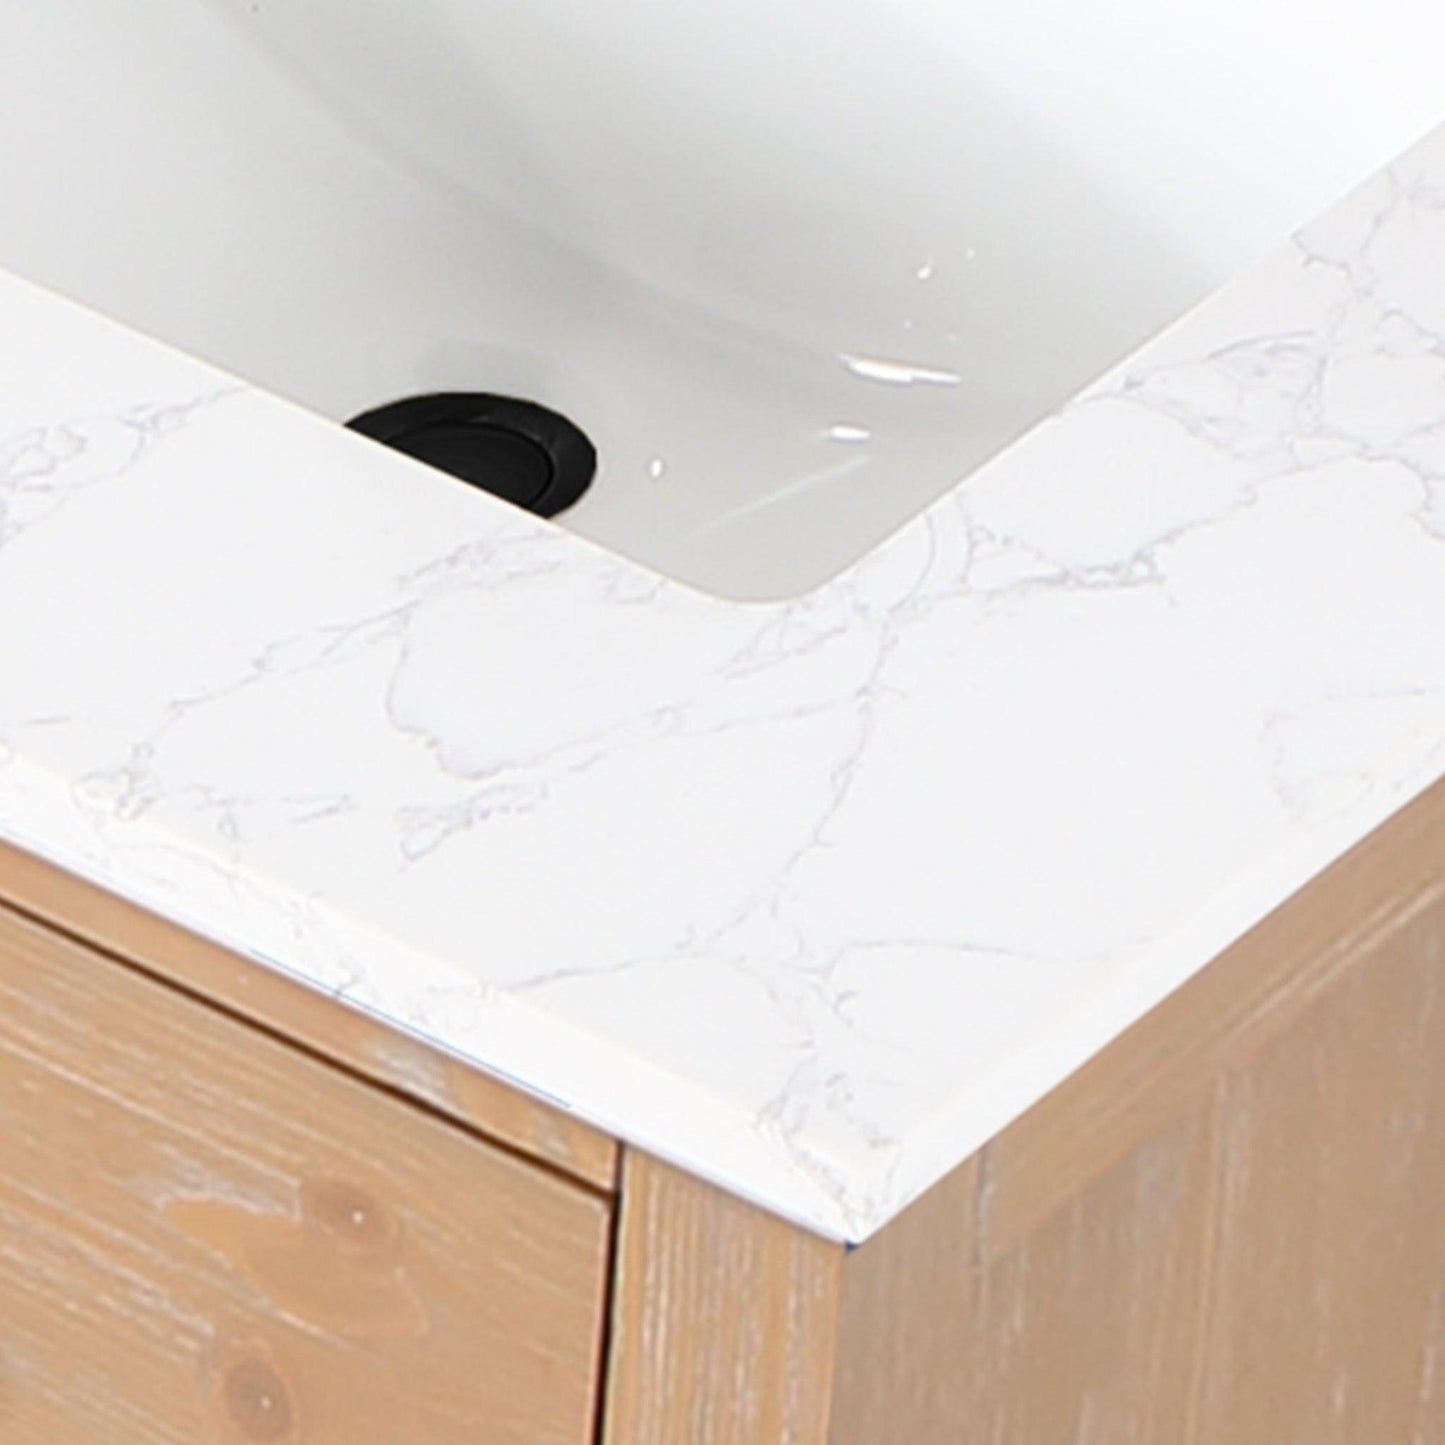 Altair Gavino 60" Light Brown Freestanding Double Bathroom Vanity Set With Mirror, Grain White Composite Stone Top, Single Rectangular Undermount Ceramic Sink, Overflow, Sidesplash, and Backsplash